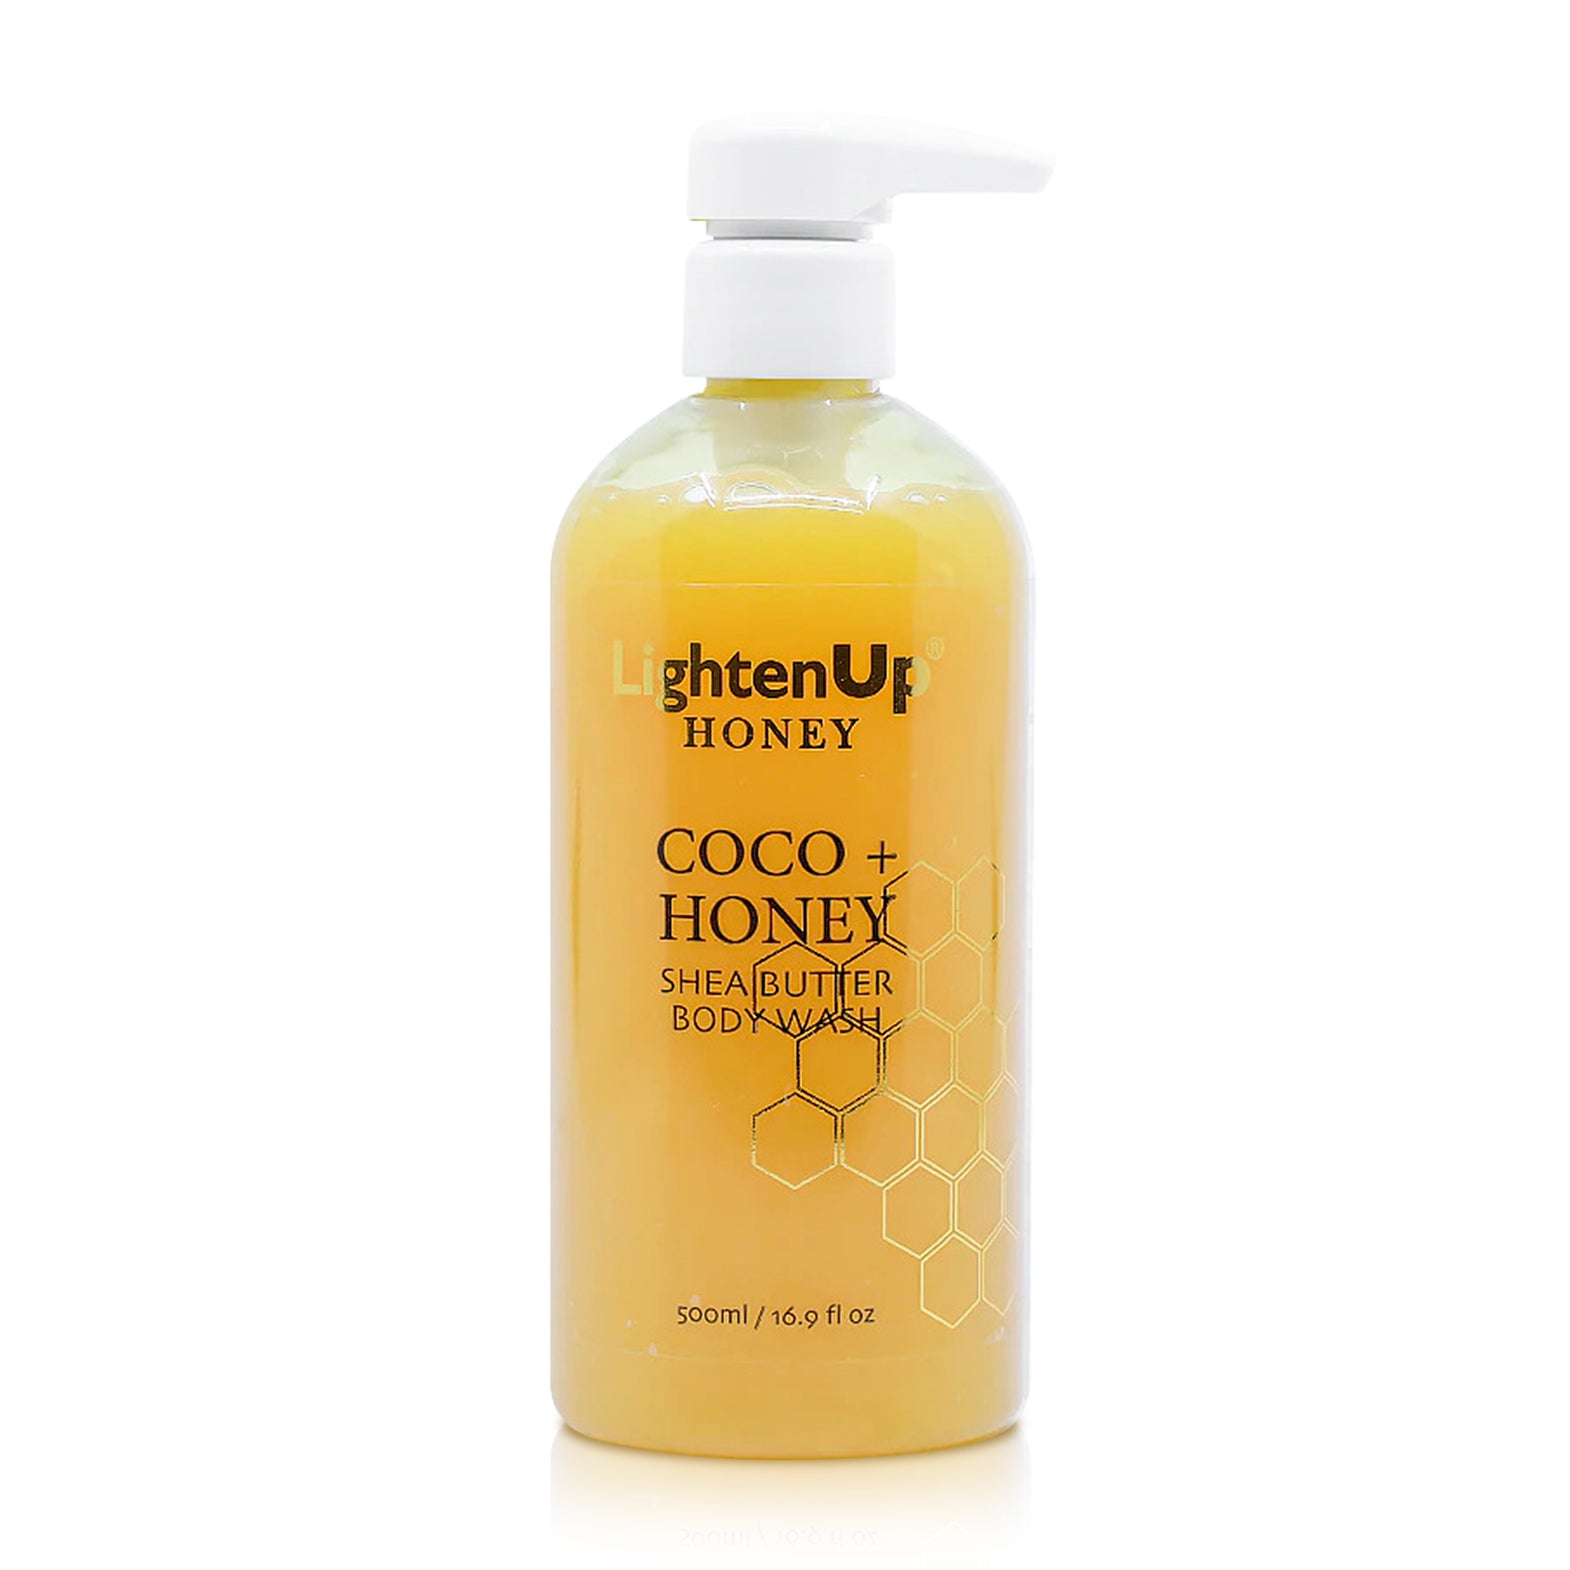 LightenUp Honey Coco + Honey Shea Butter Shower Gel 500ml